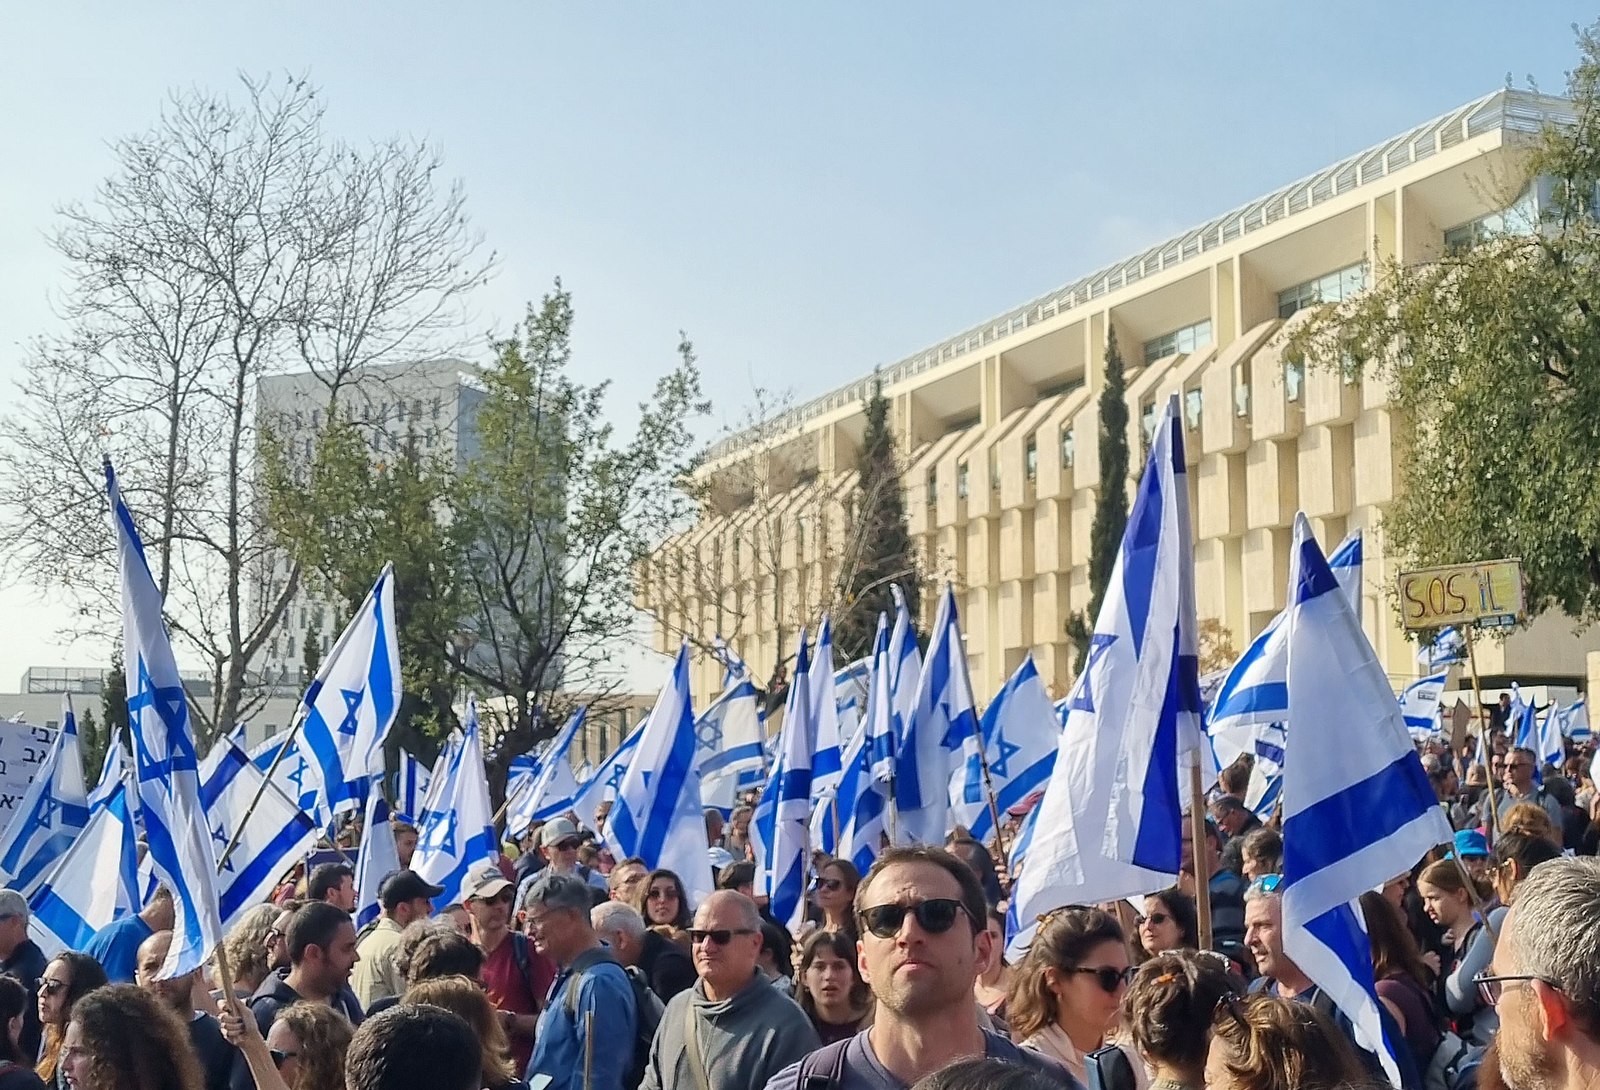 Israeli protestors congregating outside a building and waving Israeli flags.